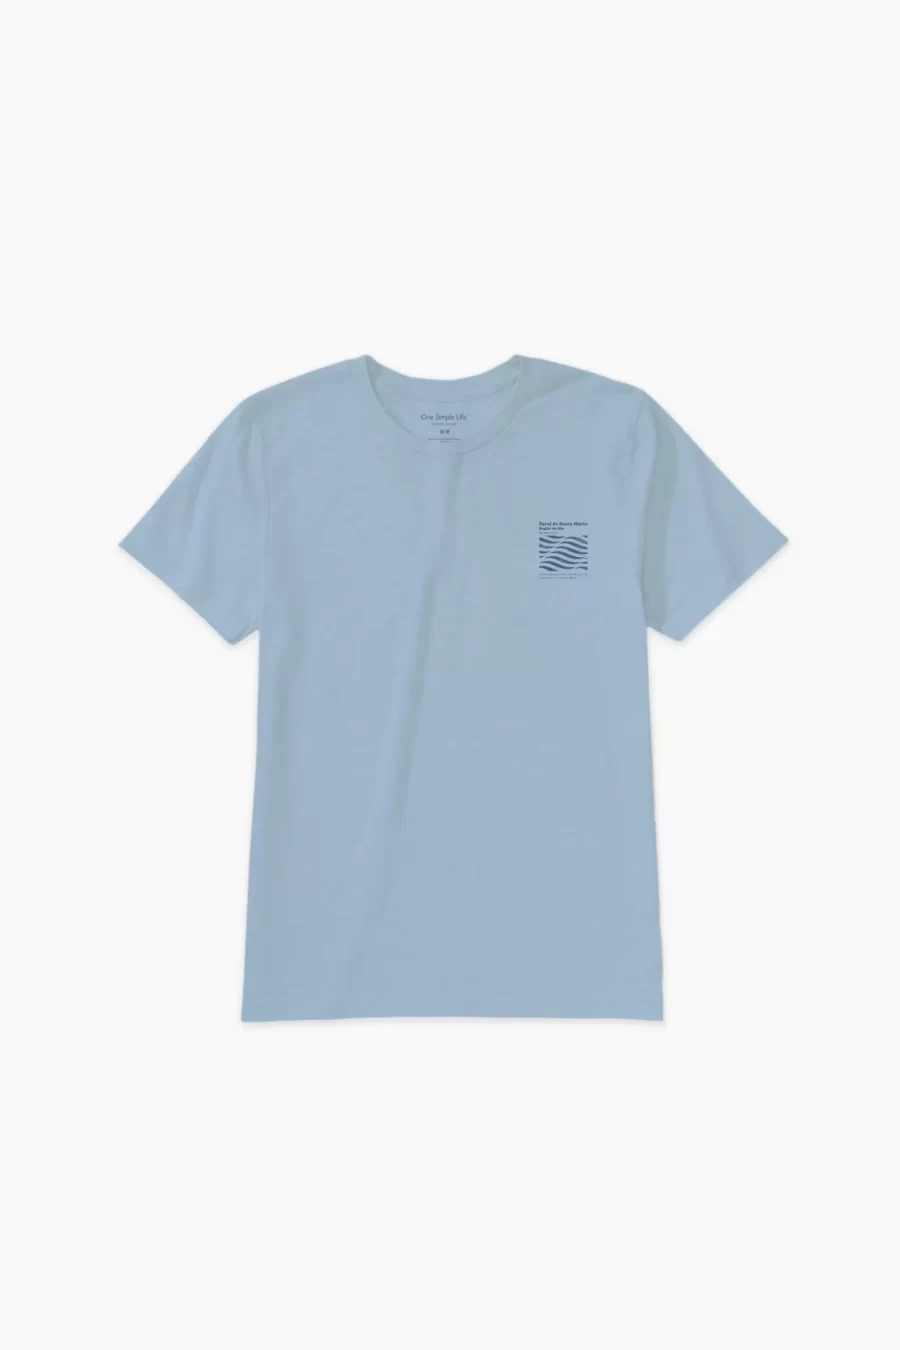 Camiseta Ilha Azul 1